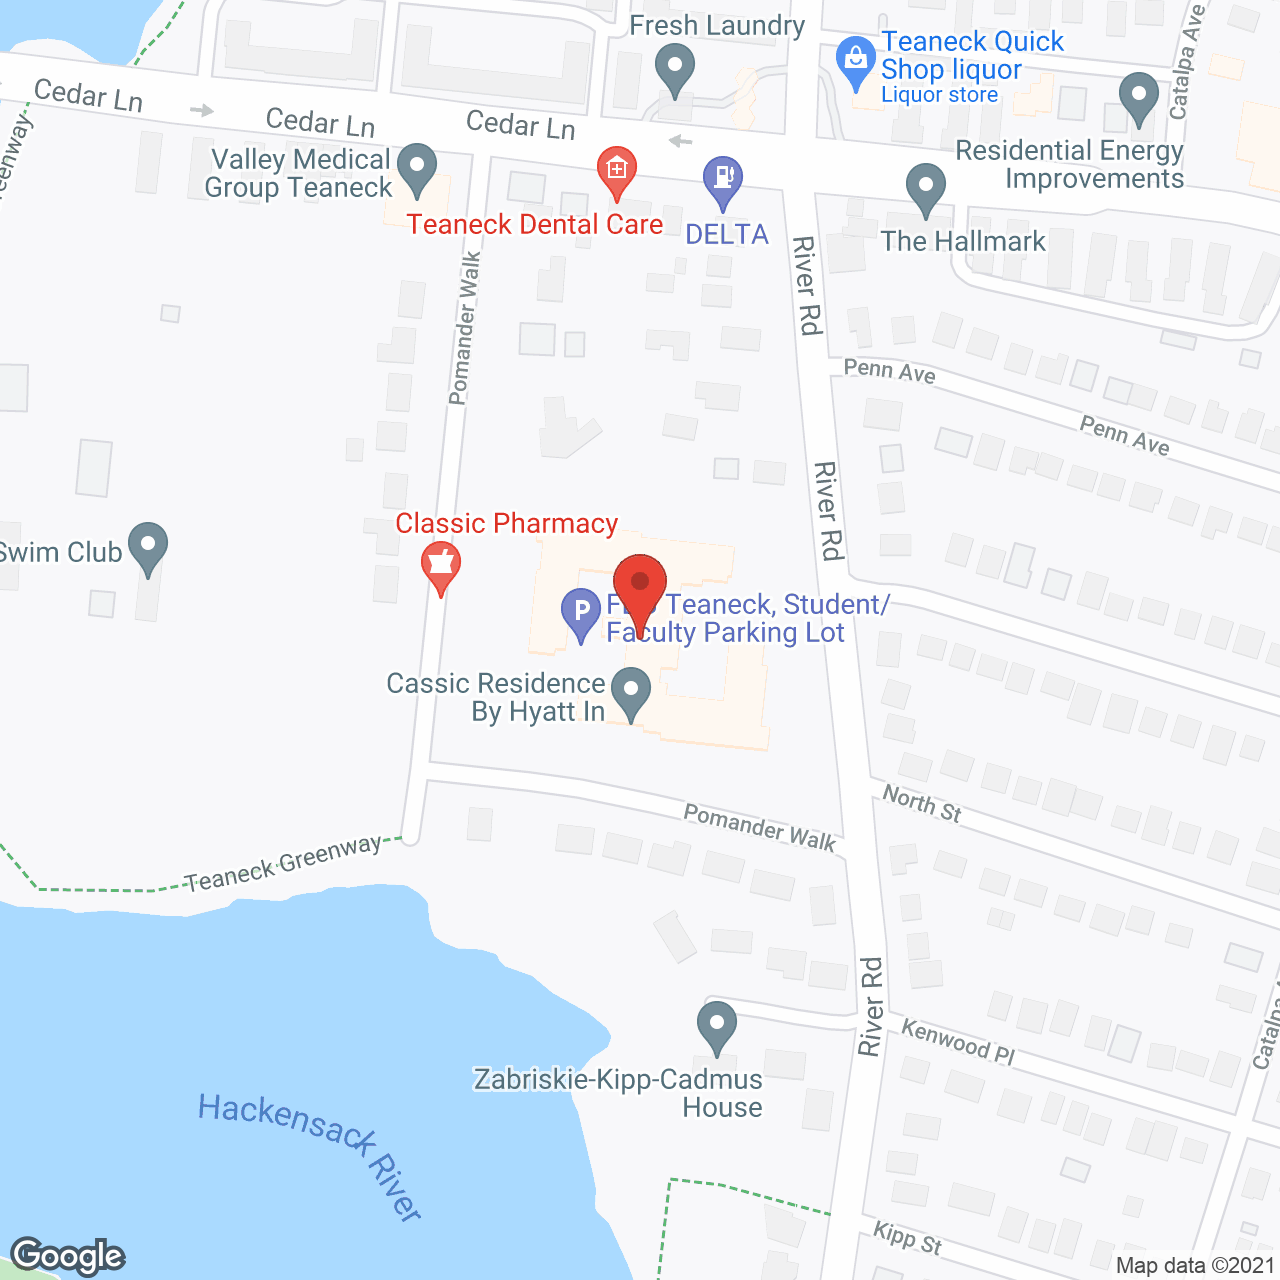 Five Star Premier Residences of Teaneck in google map